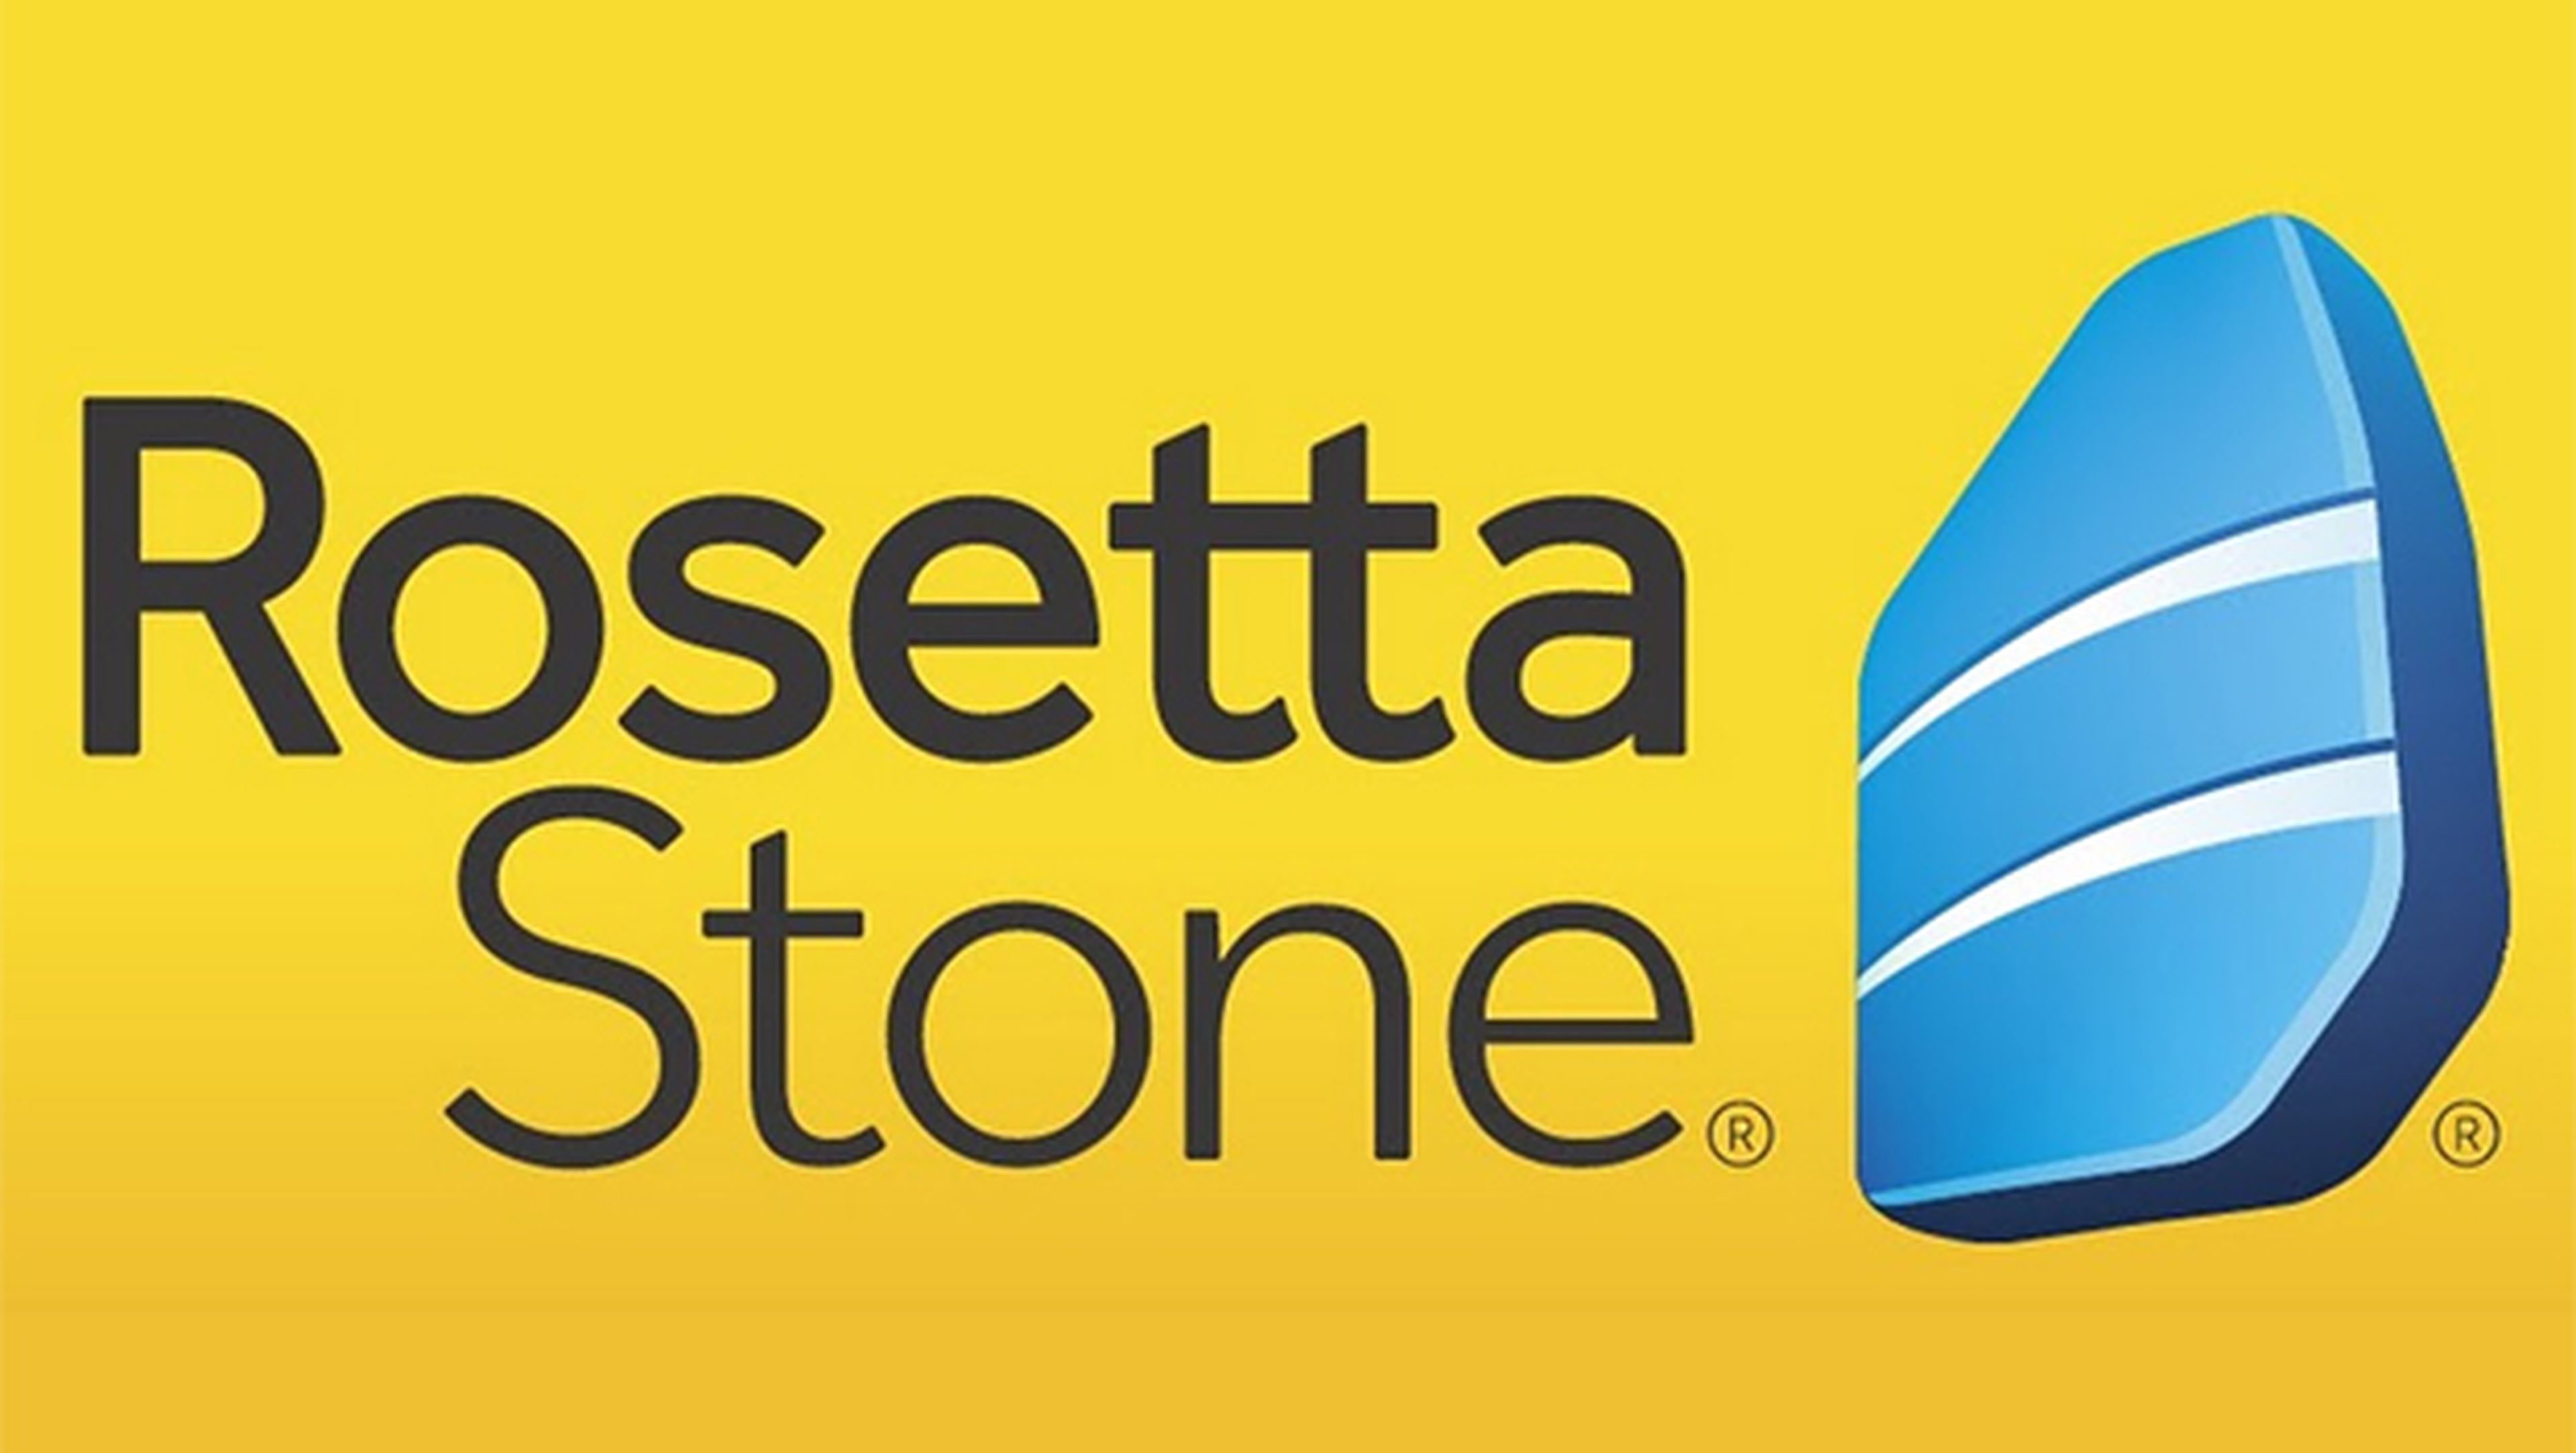 chino rosetta stone, rosetta stone movil, rosetta stone android, rosetta stone iphone